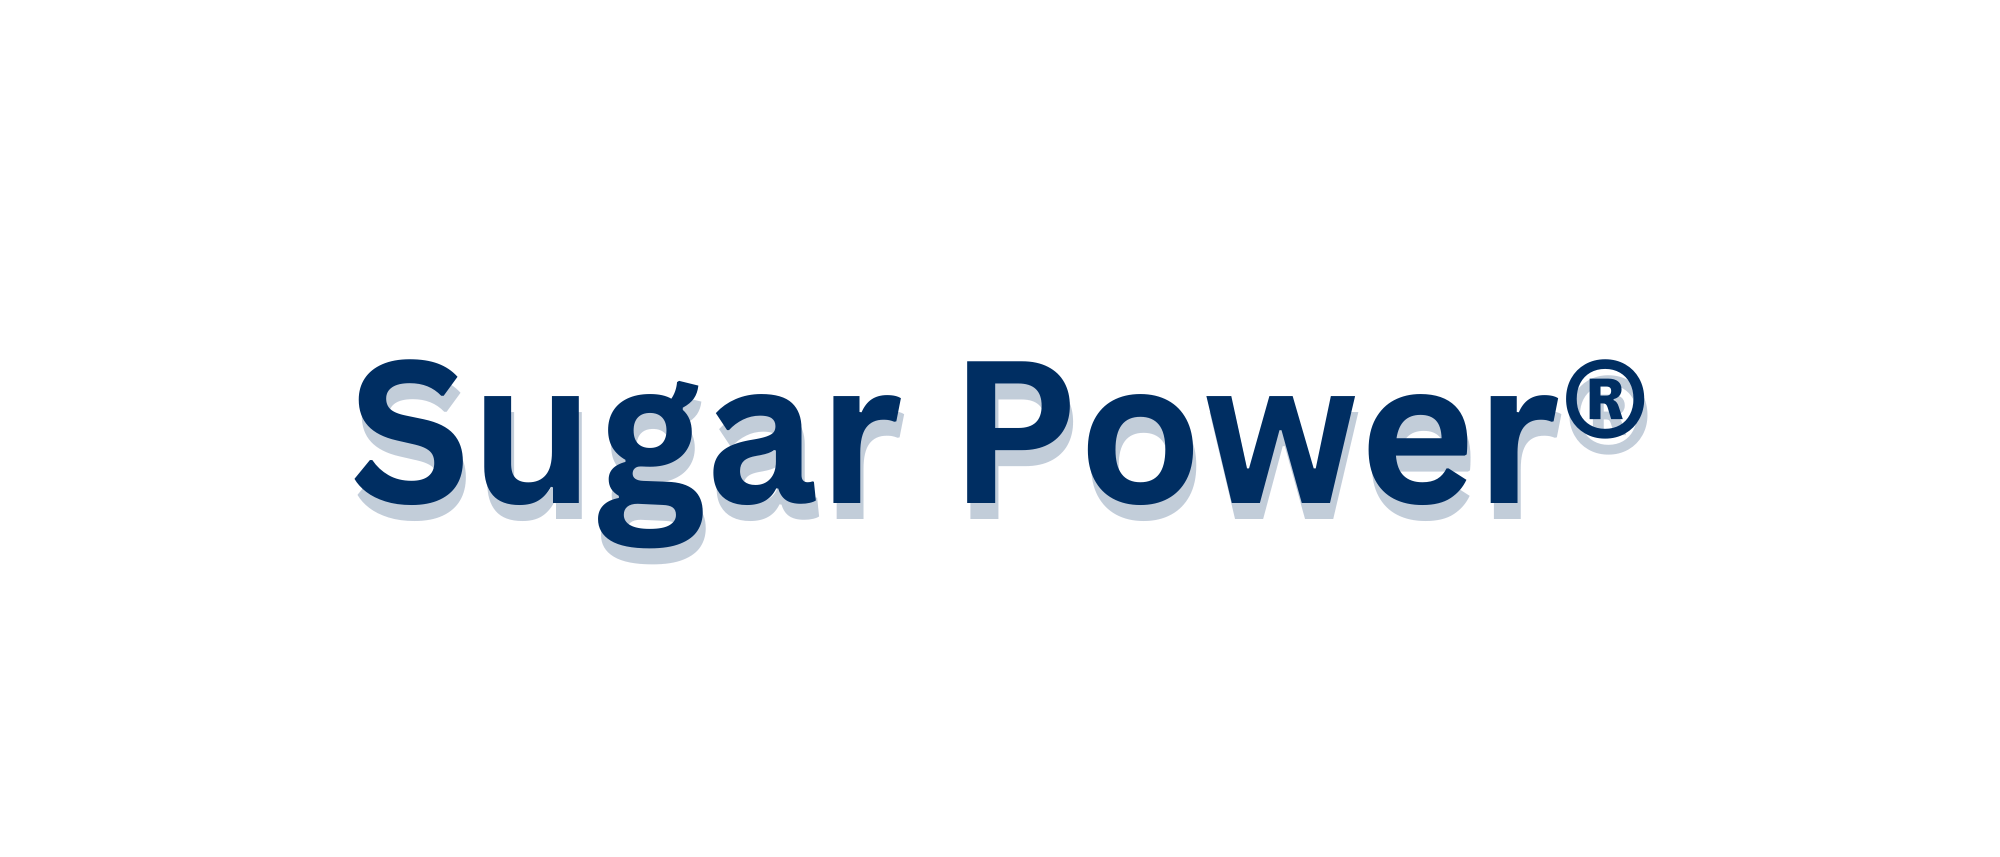 Sugar Power - Blue